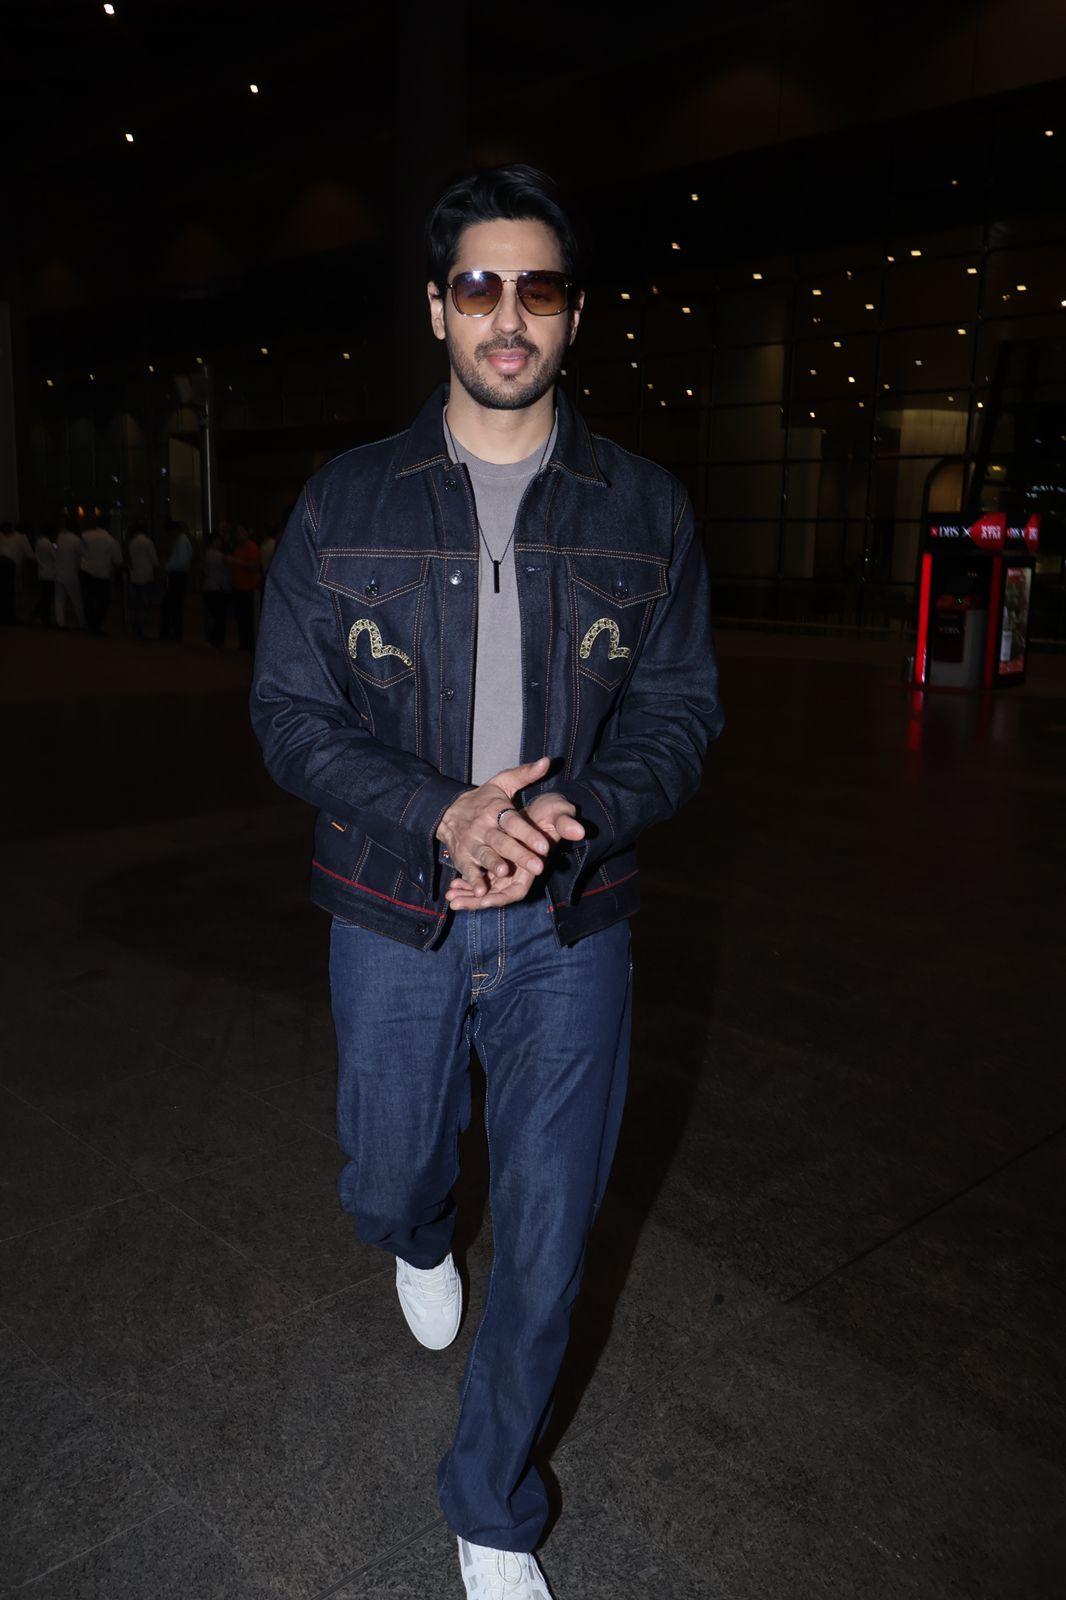 Sidharth Malhotra was clicked at the Mumbai airport today